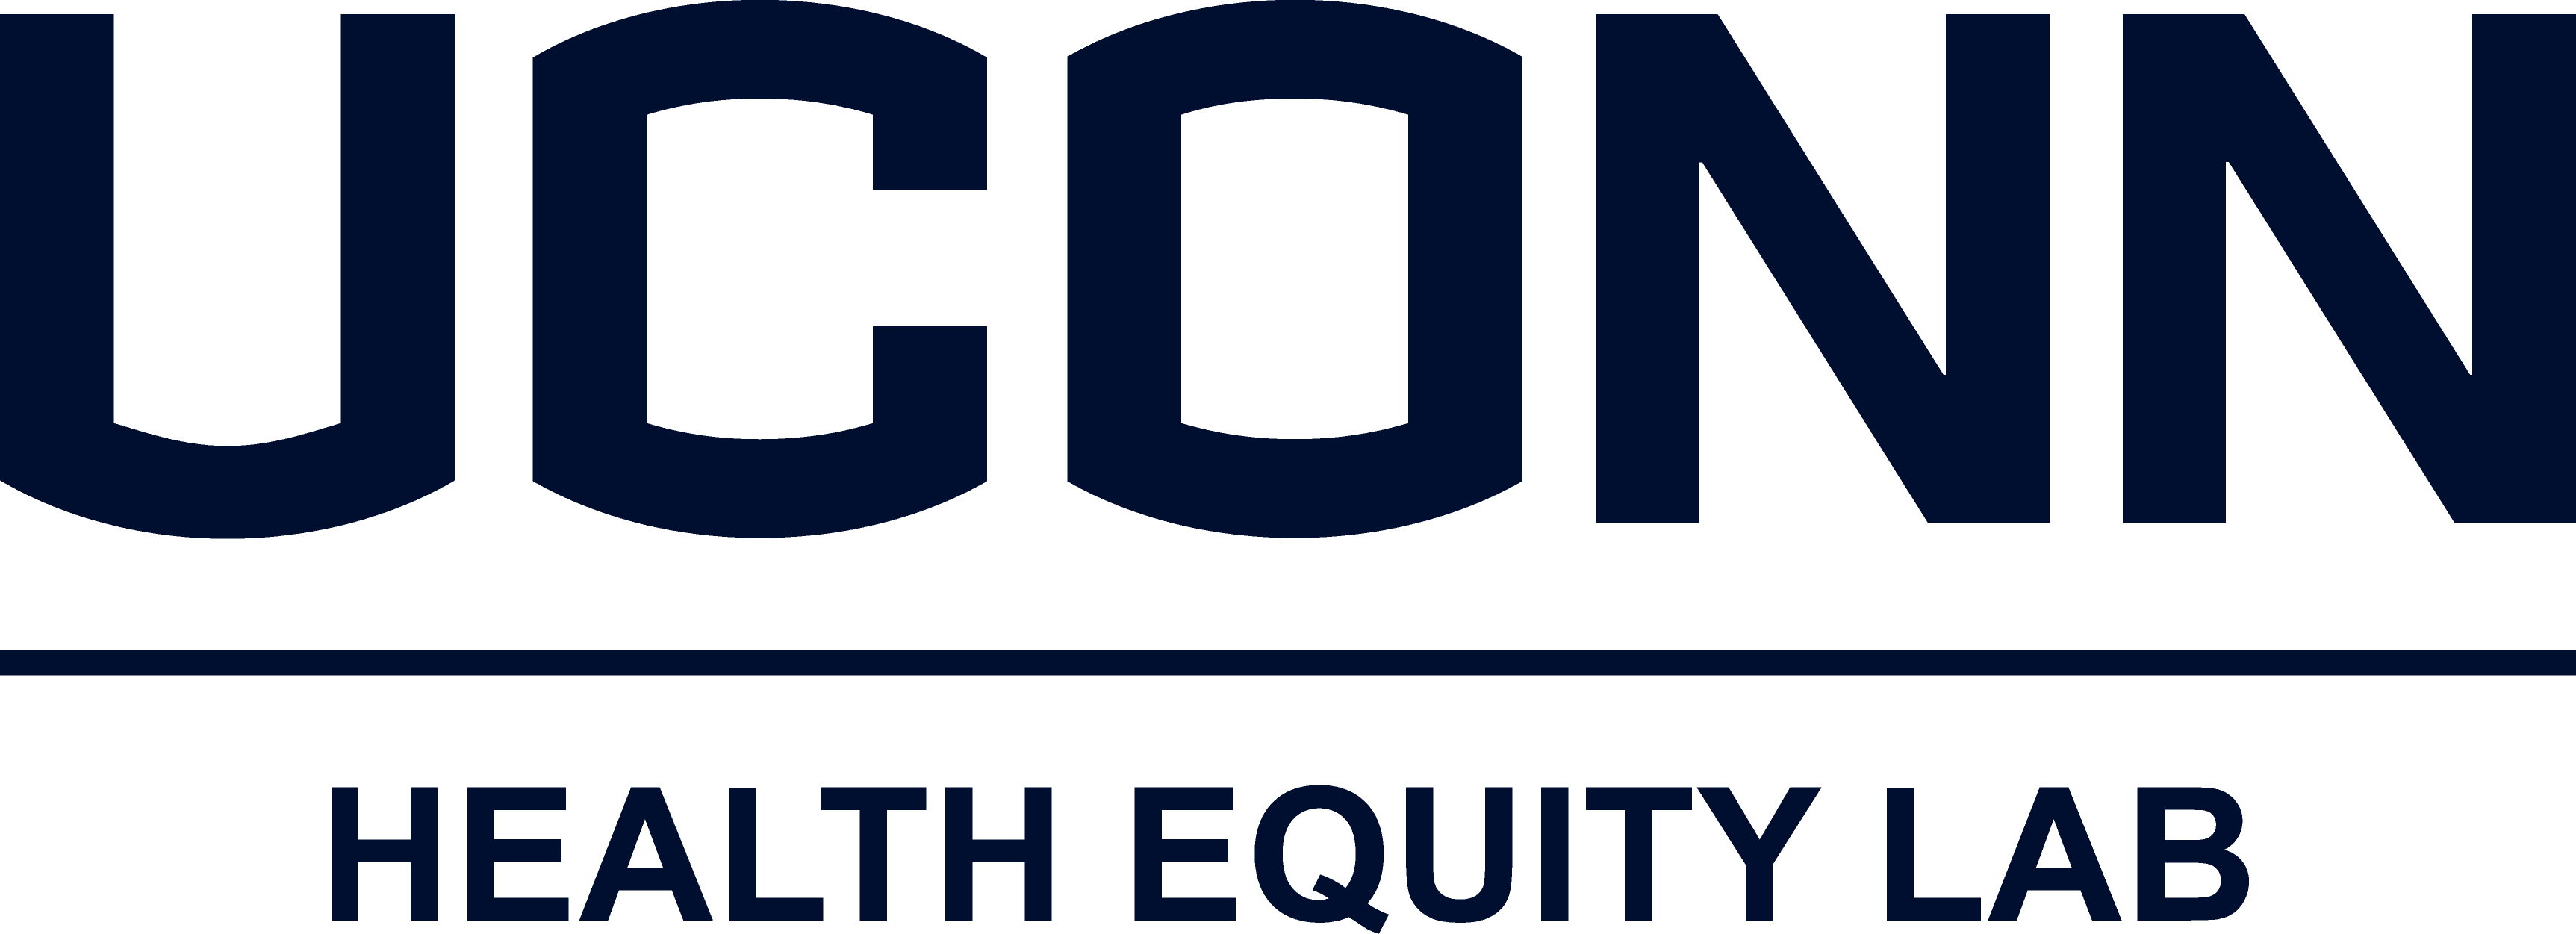 UConn Health Equity Lab